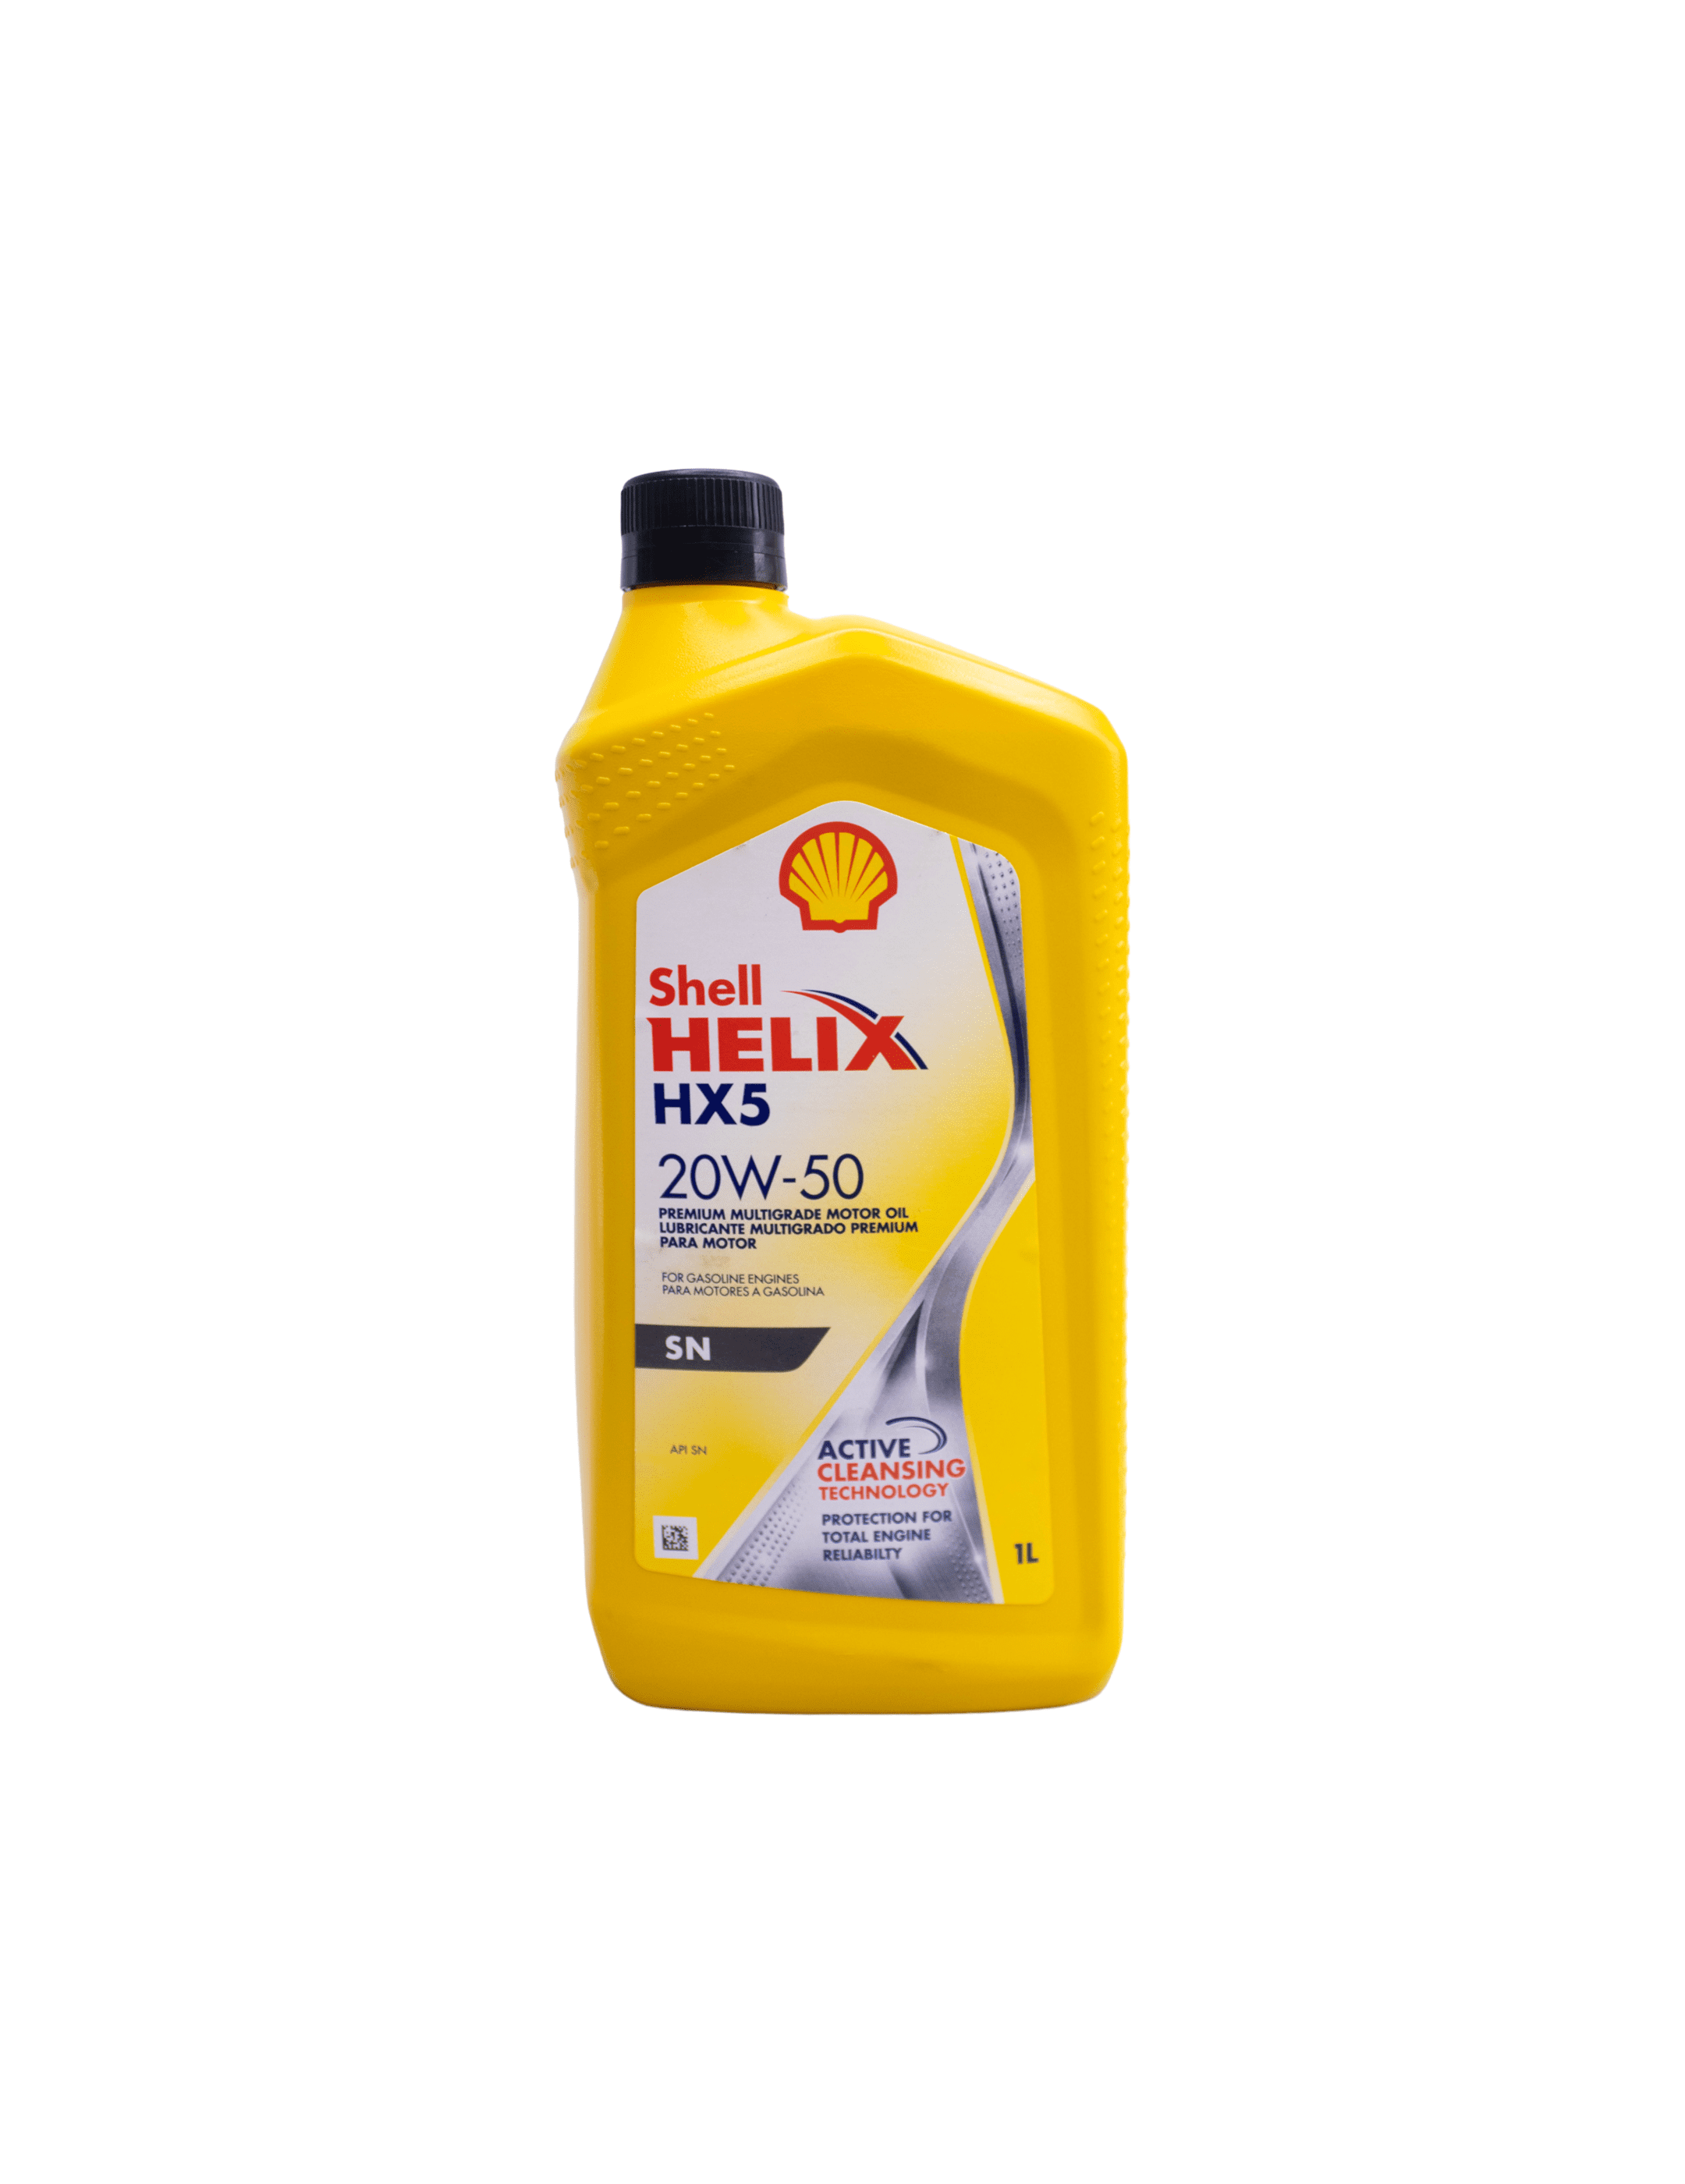 SHELL HELIX SUPER HX5 20W-50 SN 1LT